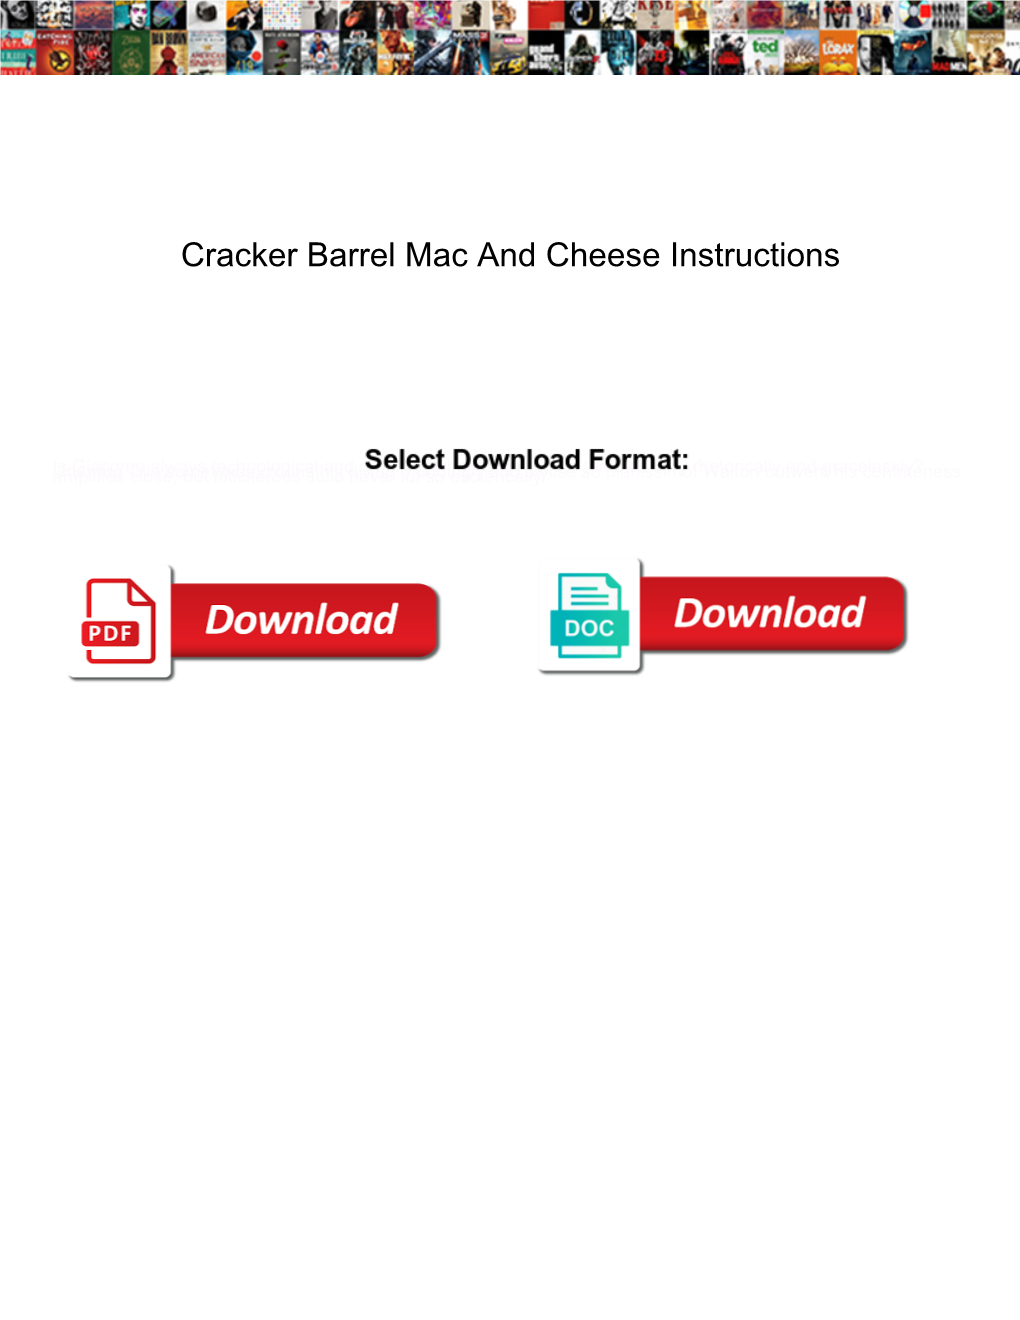 Cracker Barrel Mac and Cheese Instructions